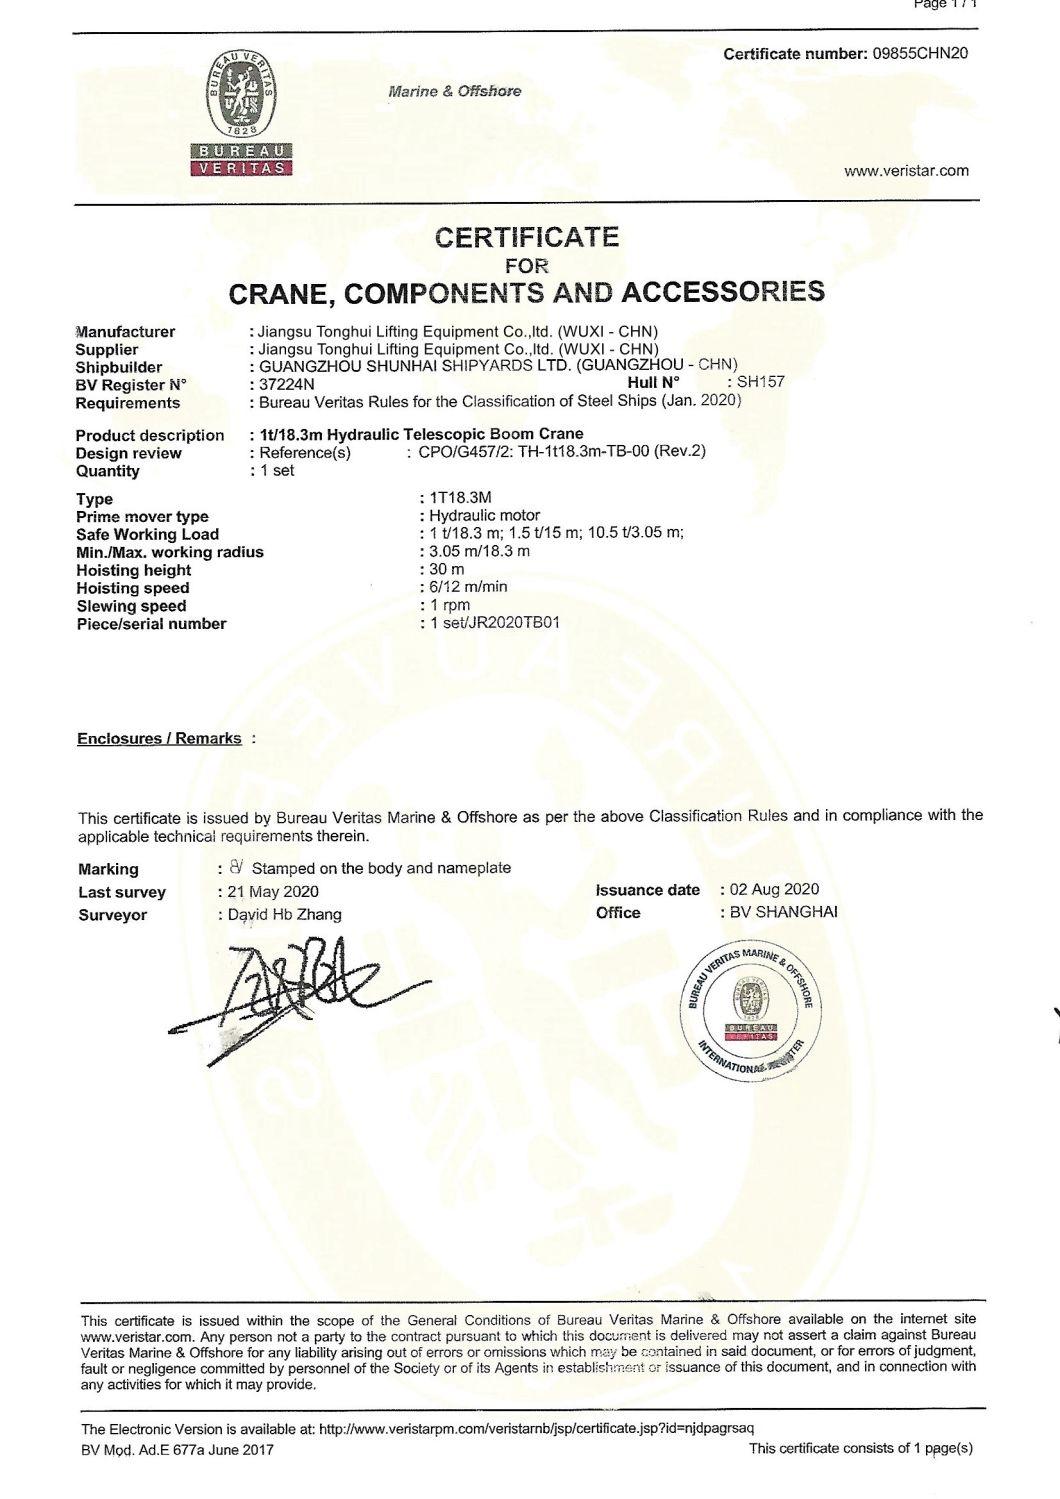 6-12m3 Hydraulic Radio Remote Control Grab with CCS, BV, Certificate